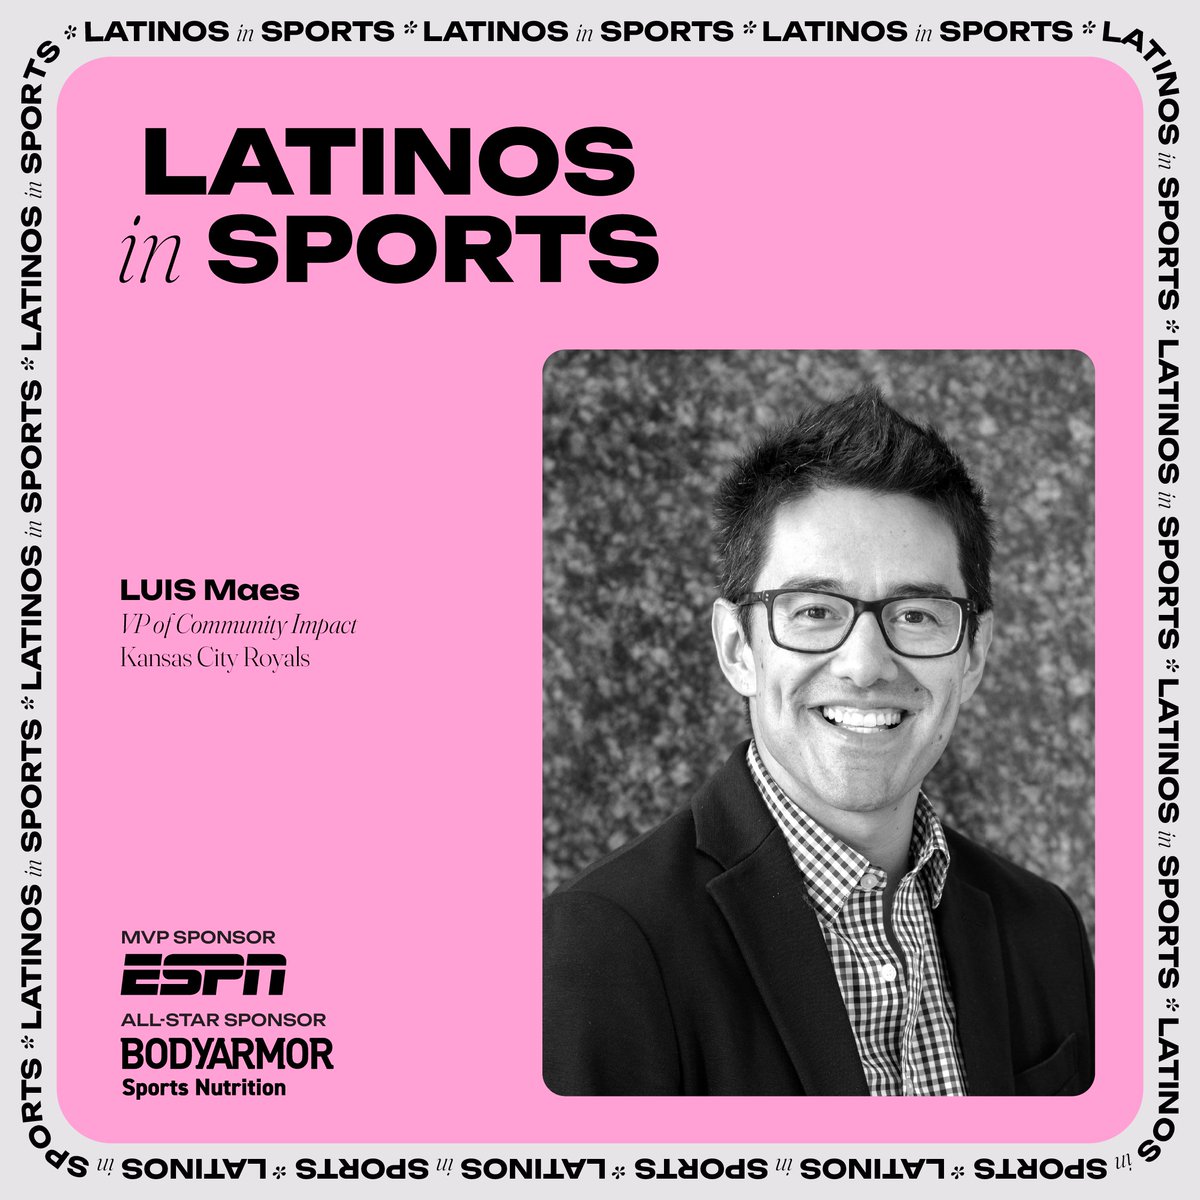 Latinos in Sports ⚾️: VP Luis Maes uses the power of sports to unite the community at the Kansas City Royals: hubs.la/Q02gCzjk0 #HispanicExecMag #LatinosinSports @Royals